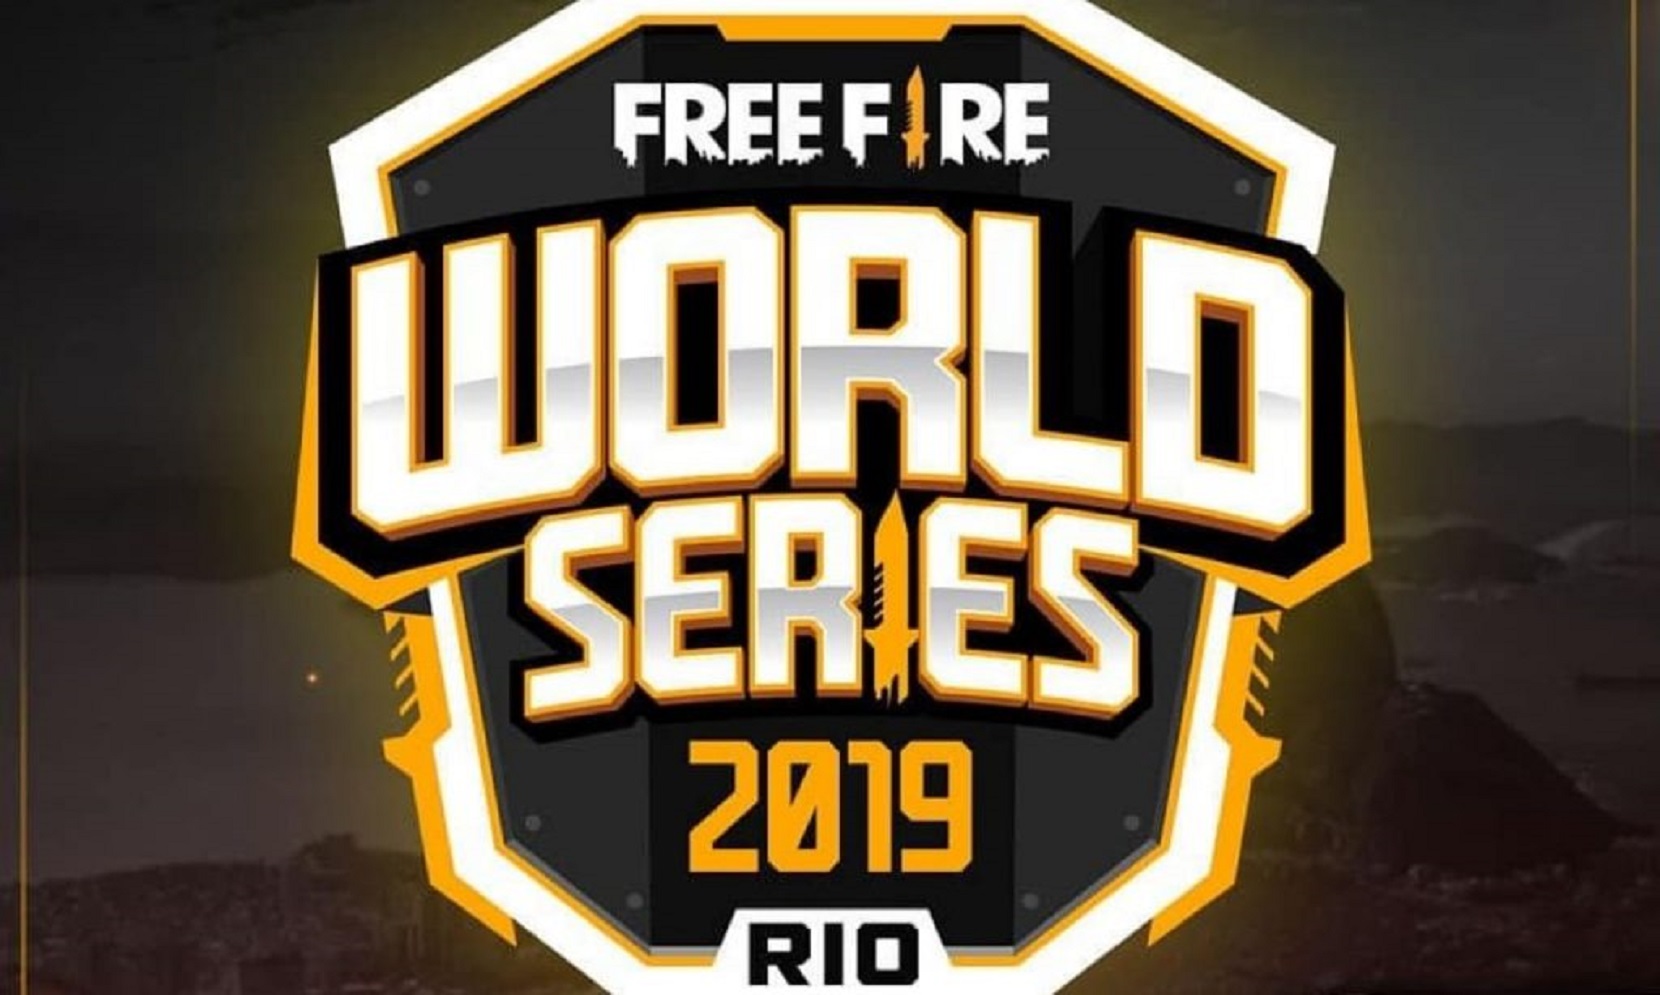 Ingressos para Free Fire World Series já disponíveis